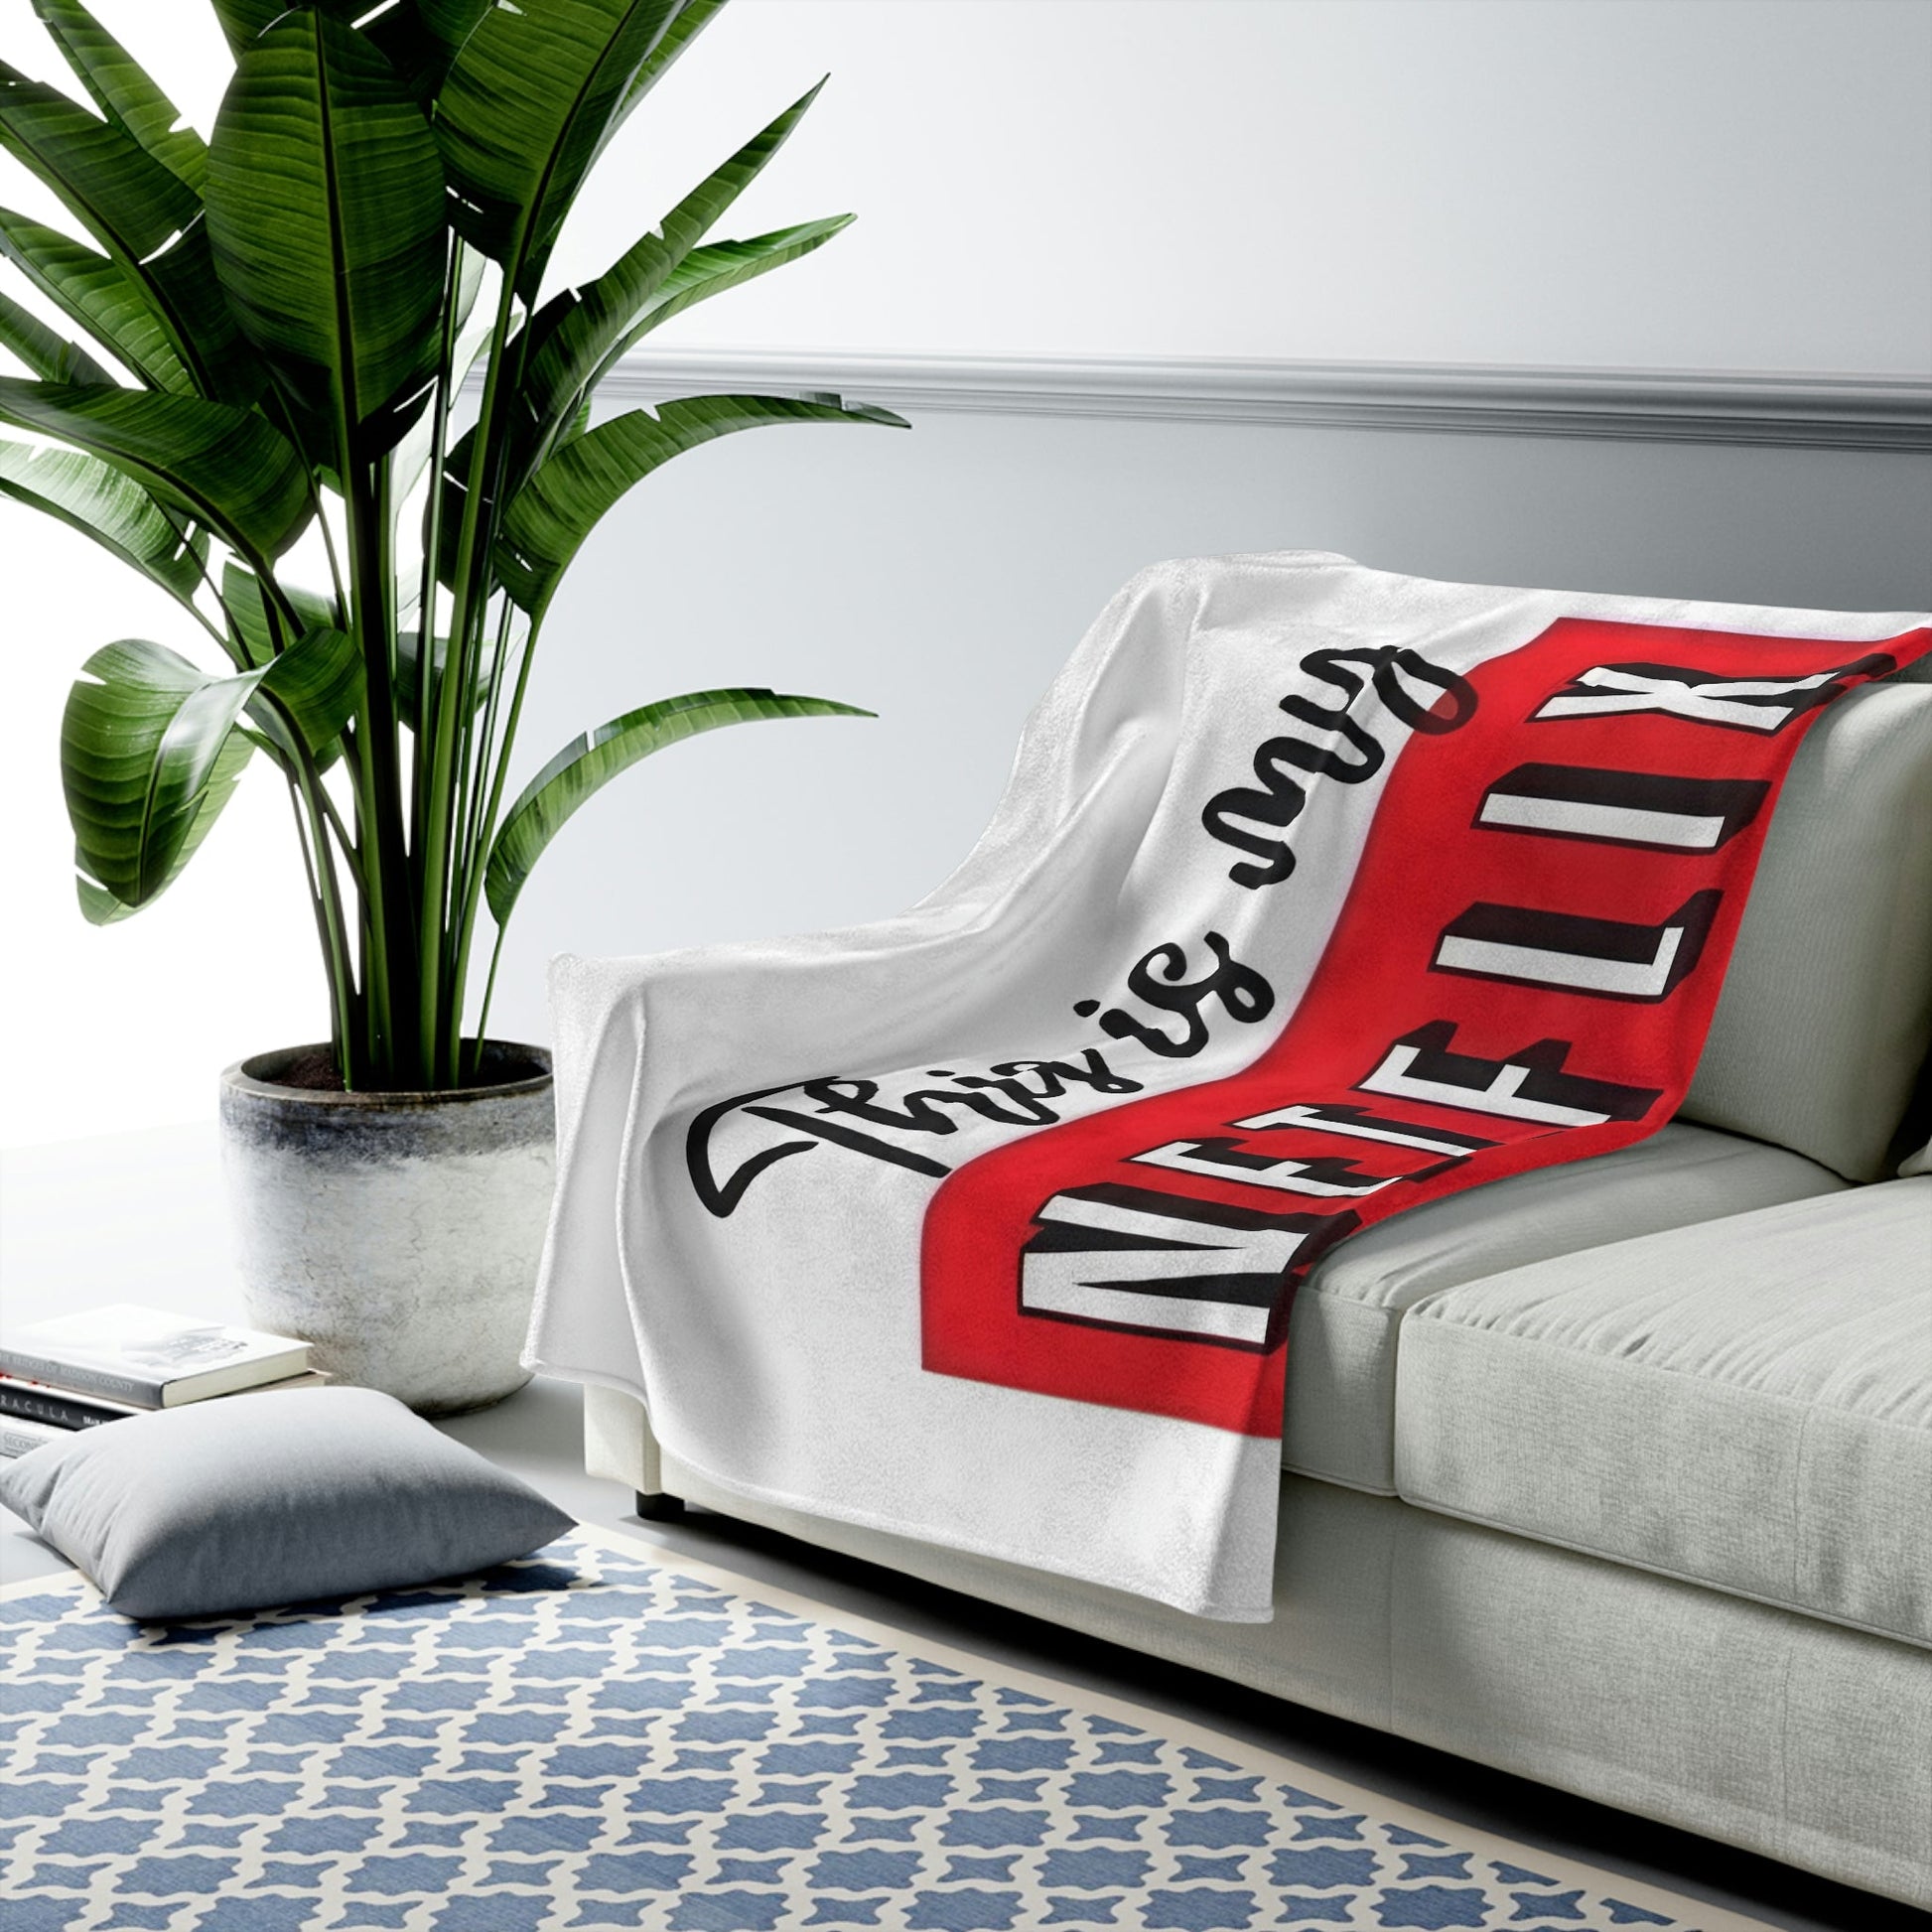 This is My Netflix Binge Watching Blanket Velveteen Plush Blanket - Premium blanket from Printify - Just $41.99! Shop now at giftmeabreak